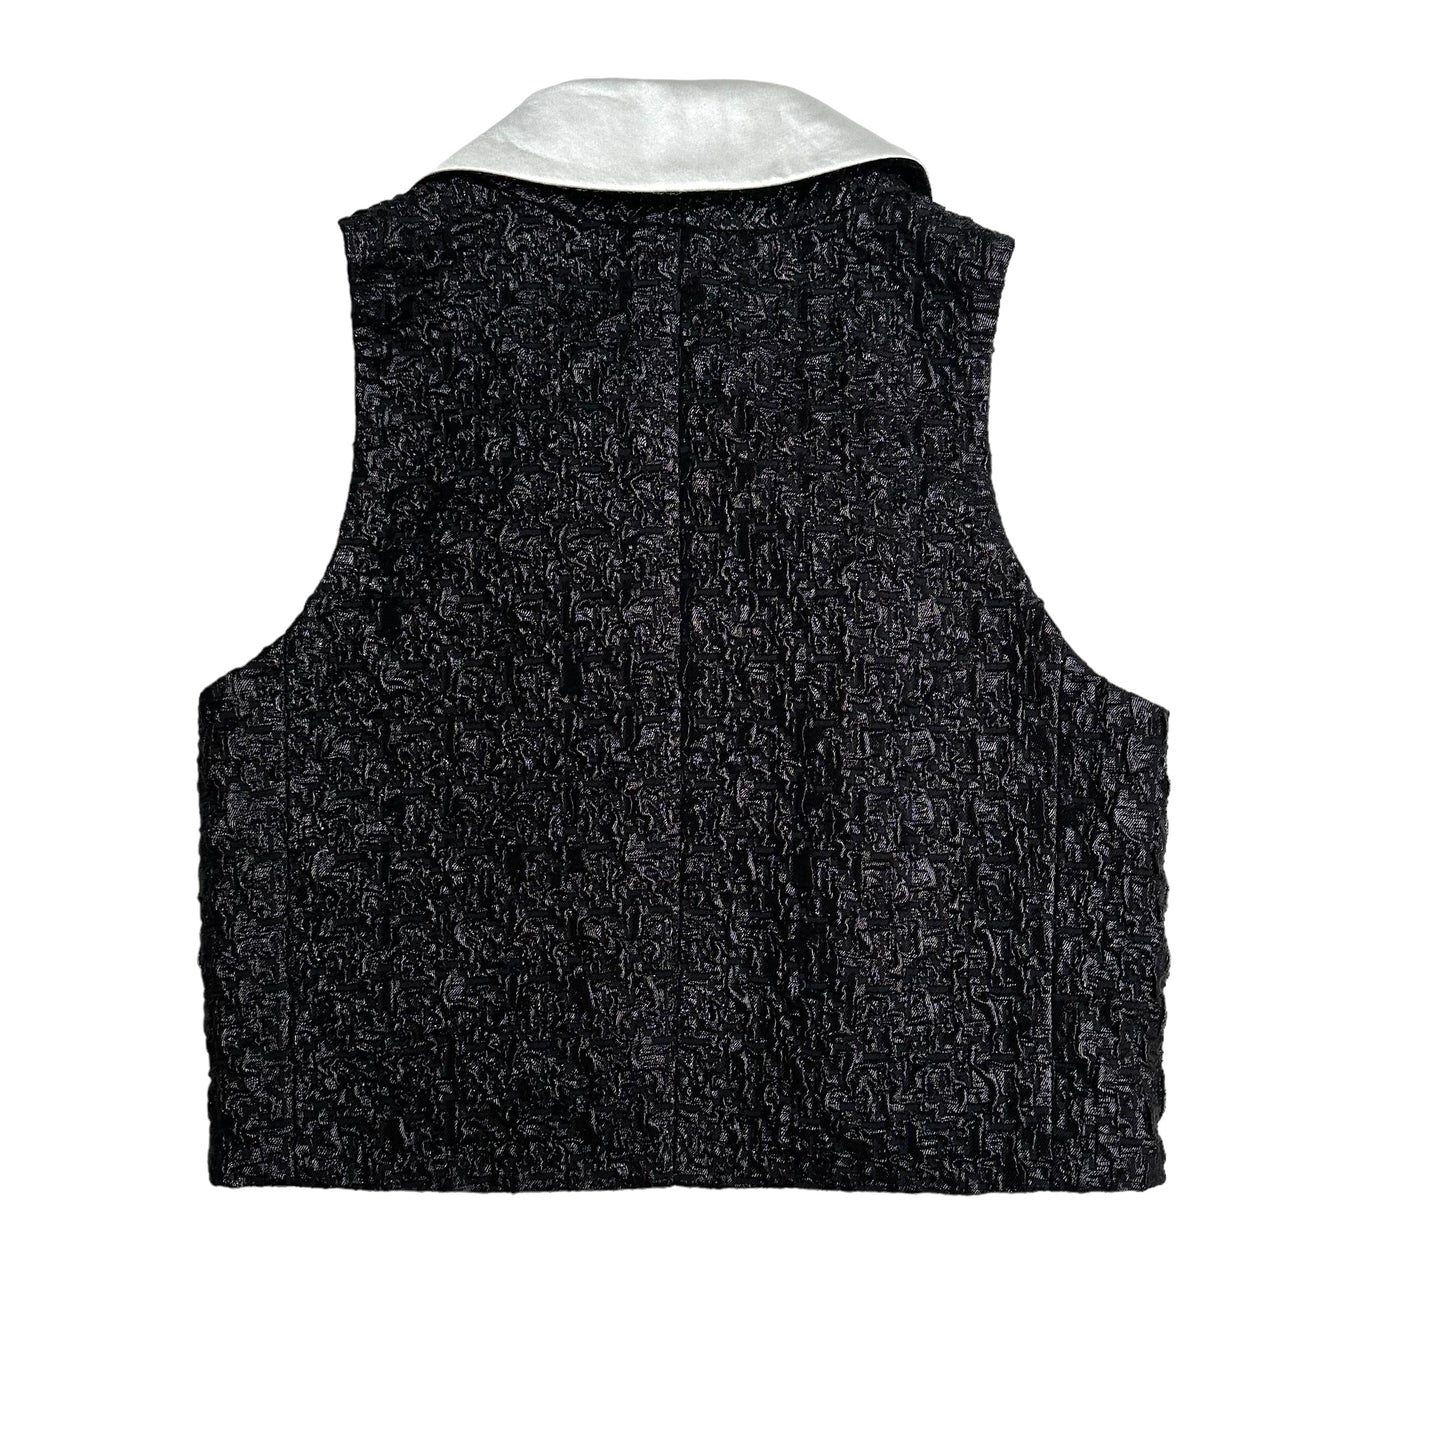 Black Crinkled Vest - XS